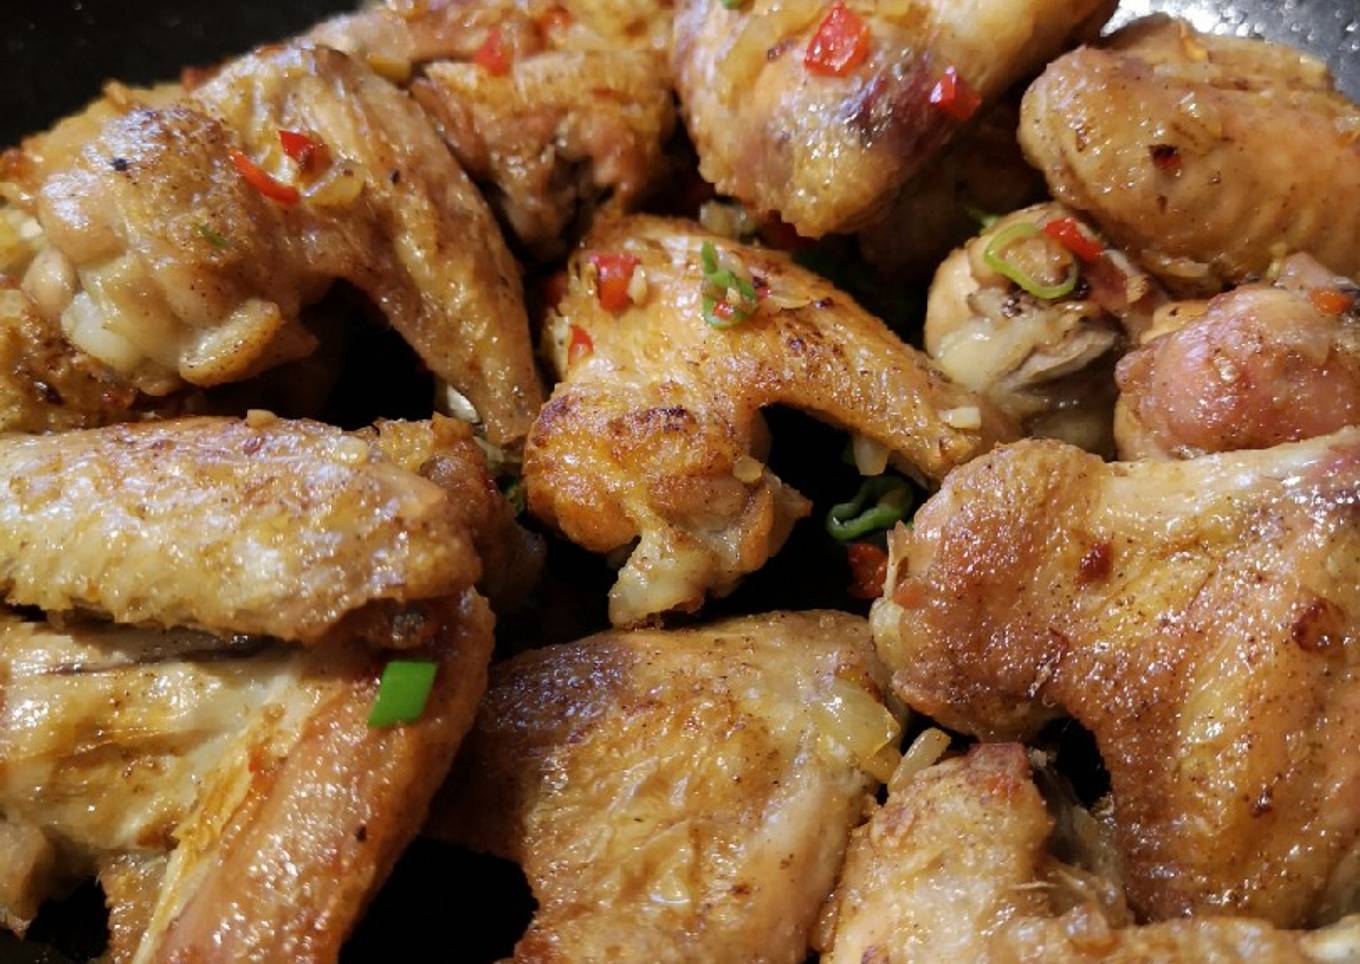 Salt and pepper baked crispy chicken wings